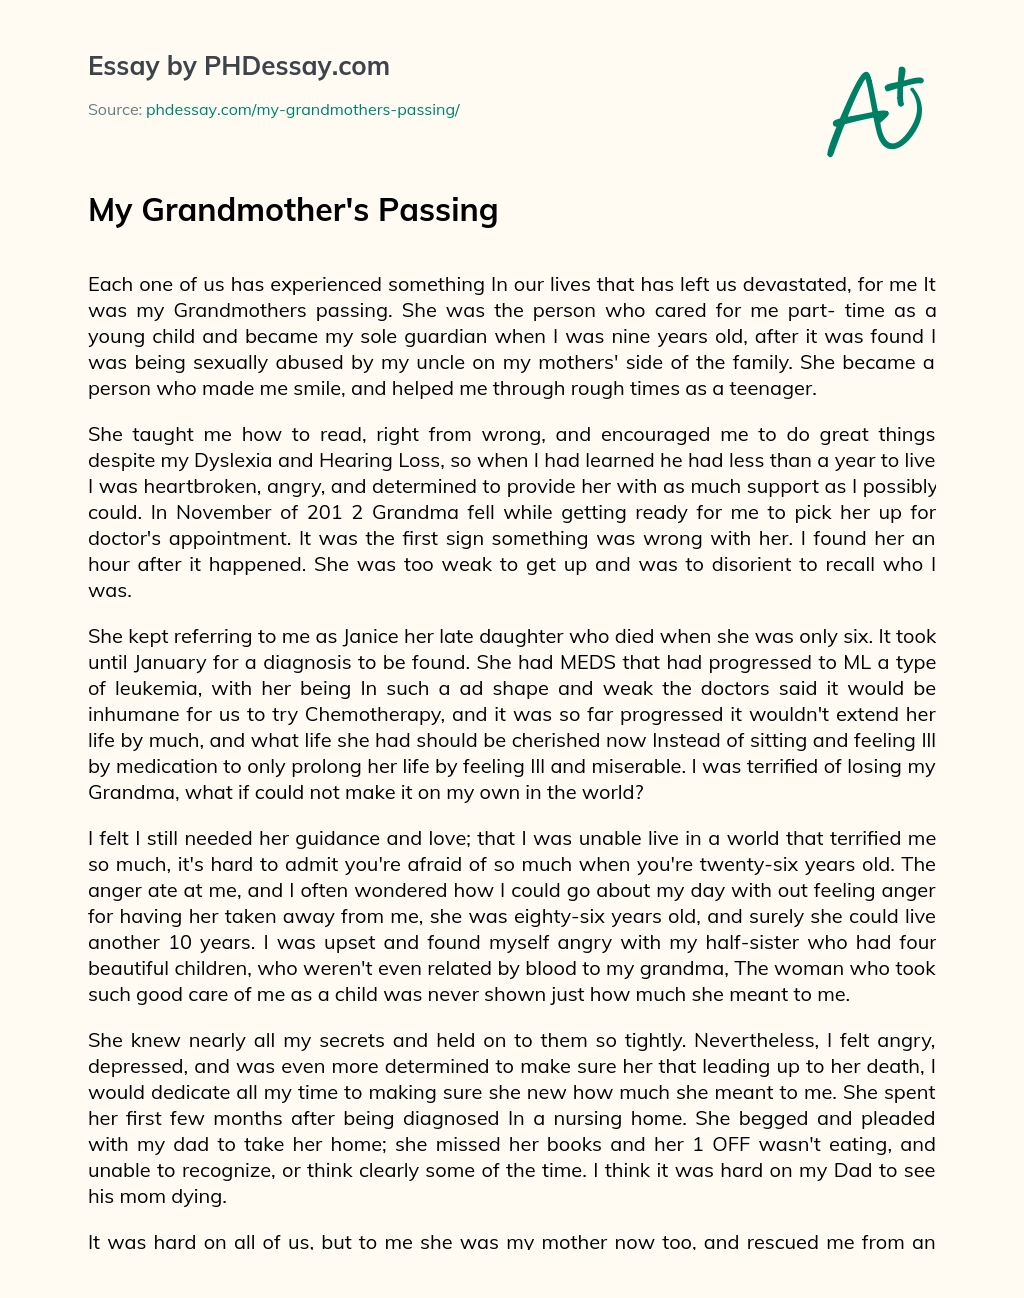 My Grandmother’s Passing essay